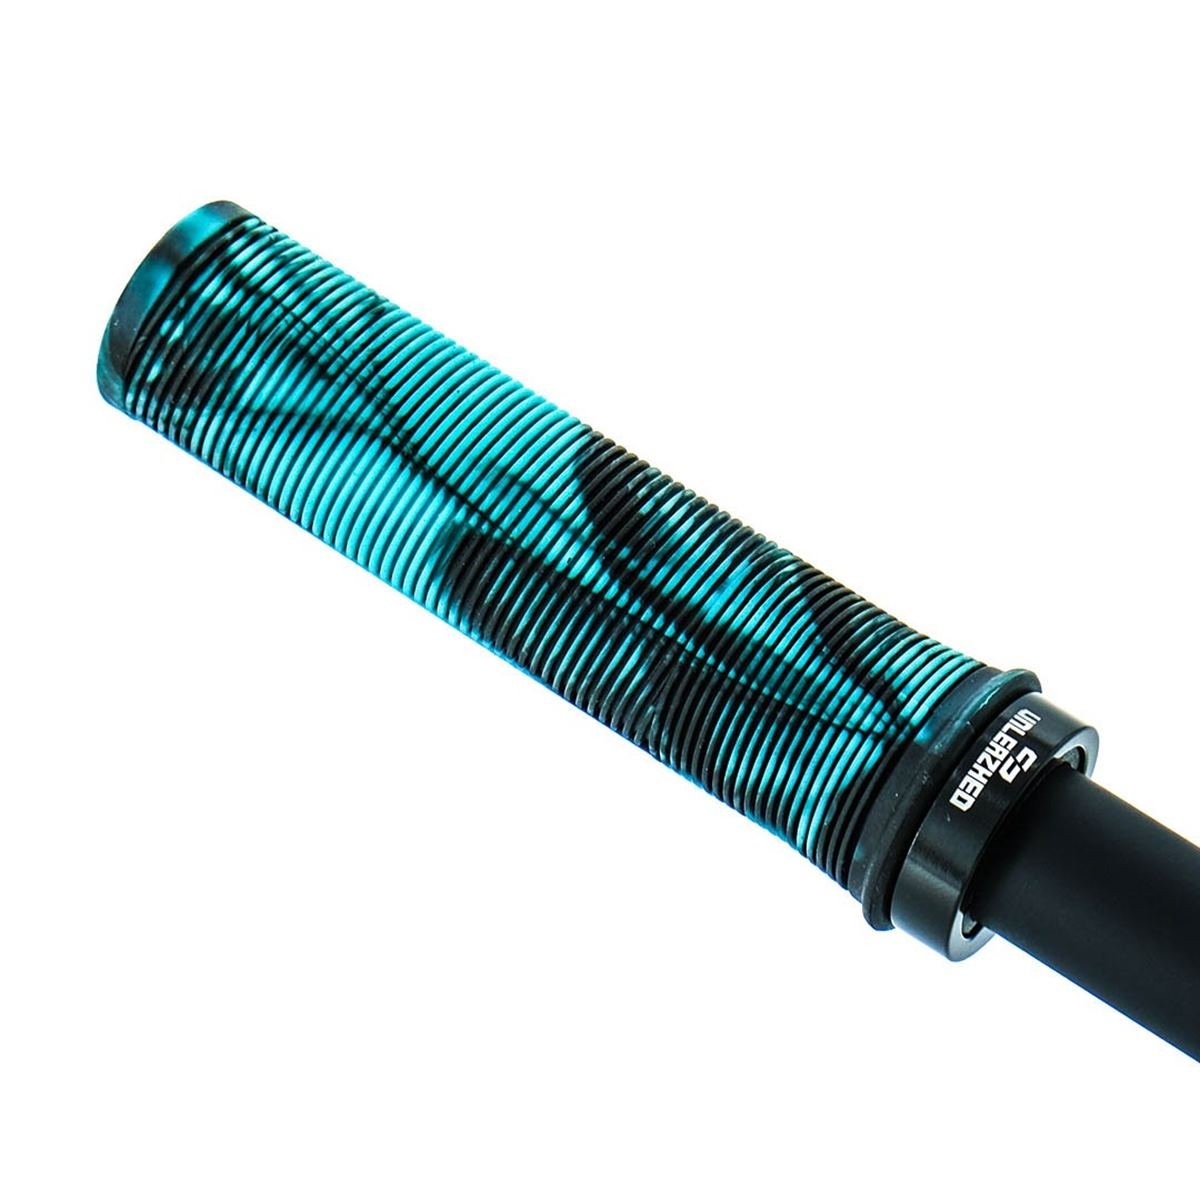 Unleazhed Grips VTT G1 Turquoise/Noir, 135 x 31 mm